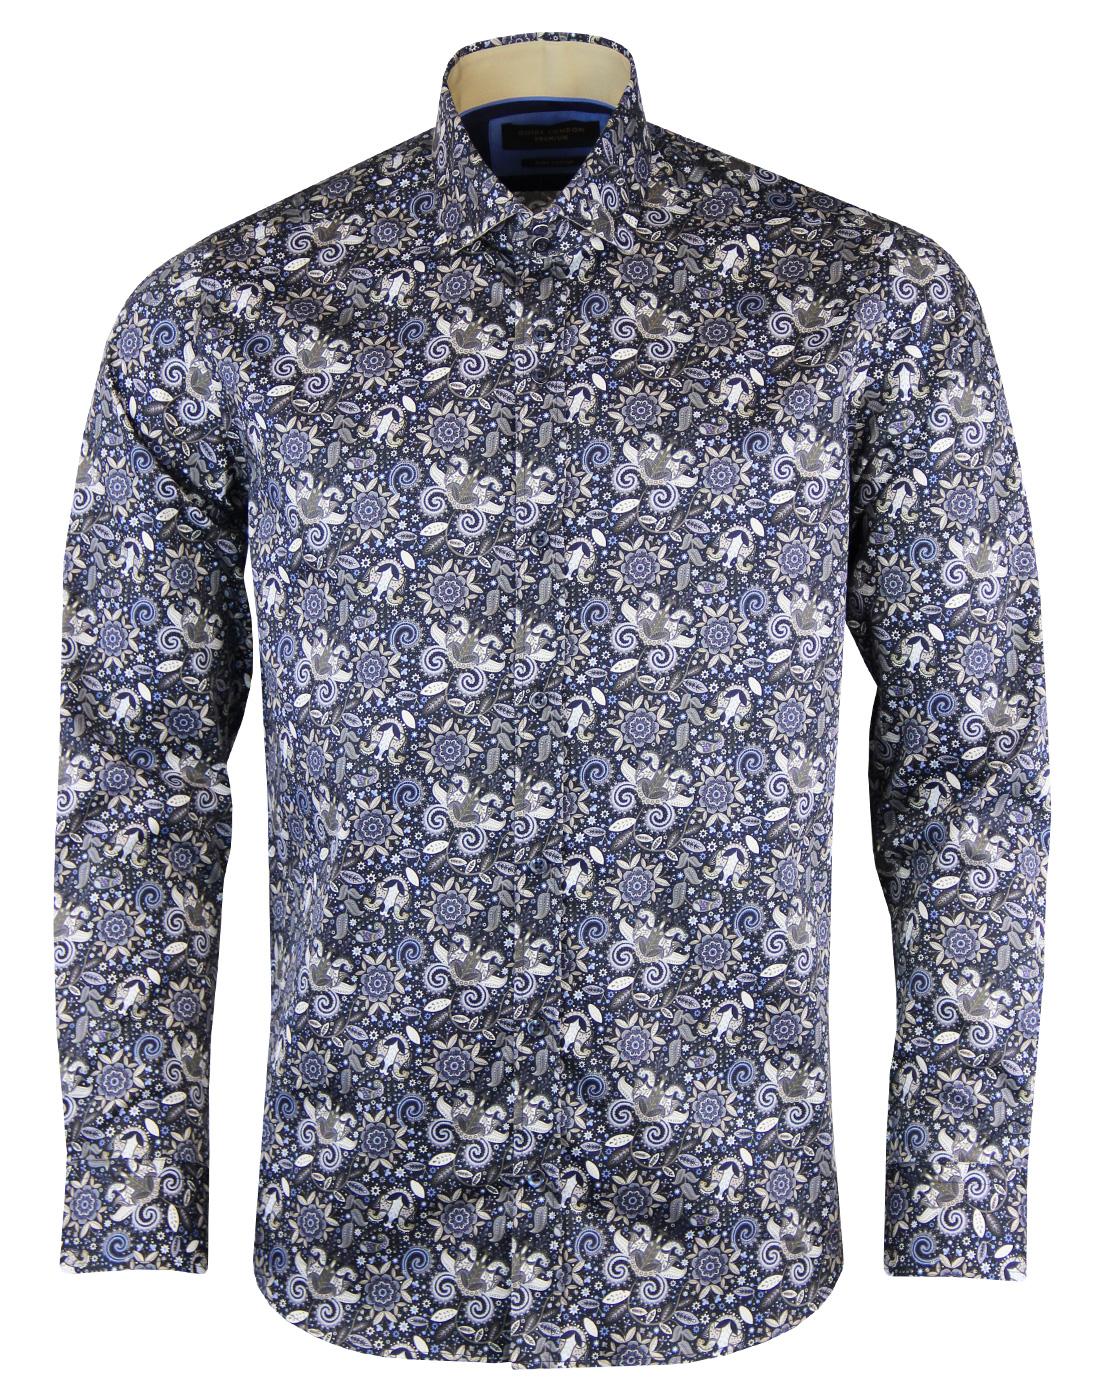 GUIDE LONDON Mod Floral Paisley Big Collar Shirt